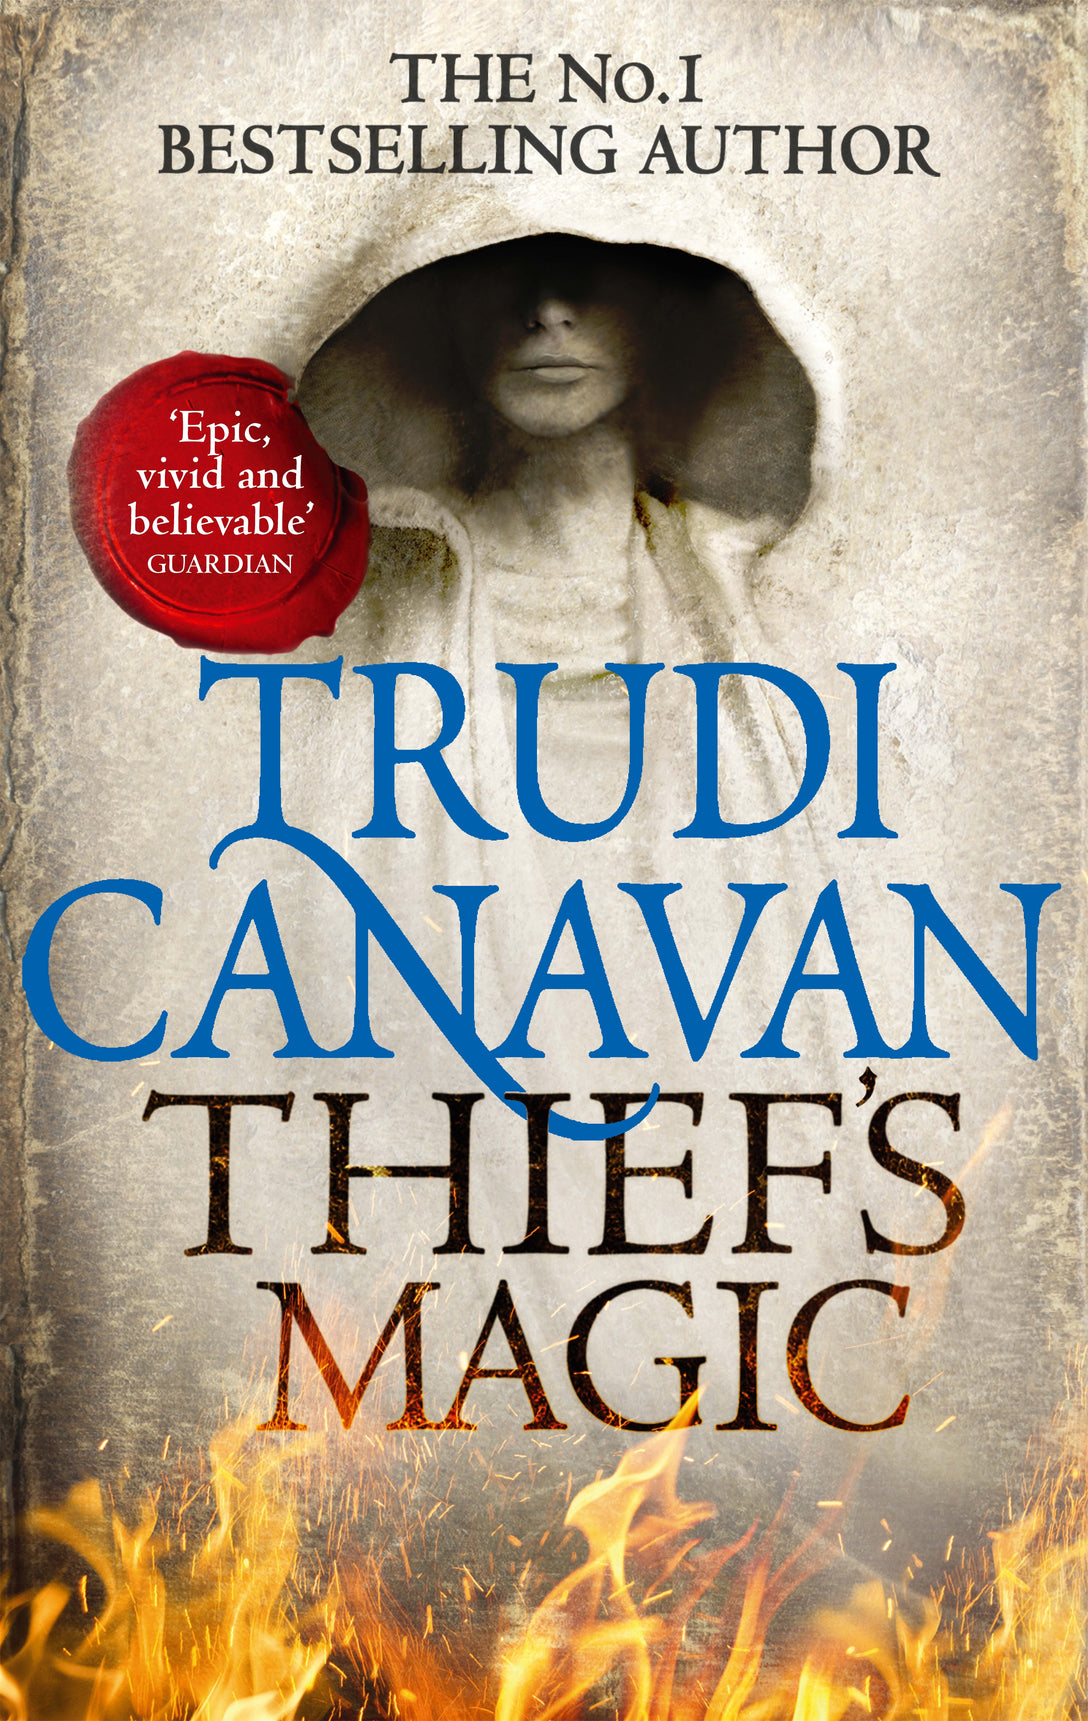 Thief's Magic by Trudi Canavan